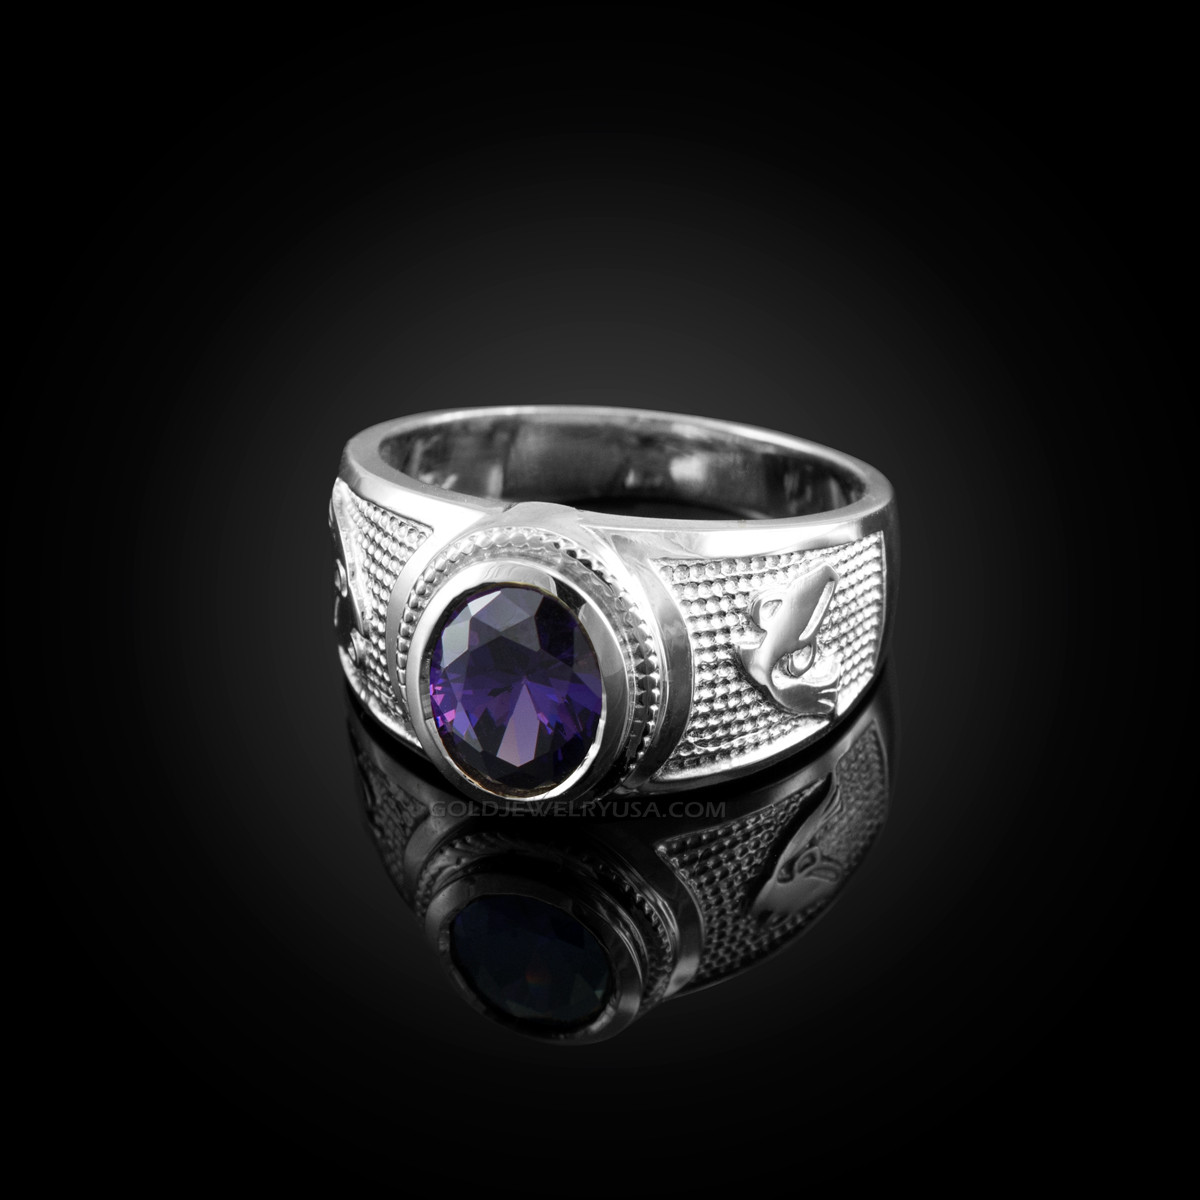 Oval Ceylon Sapphire Engagement Ring in White Gold | Aquarius